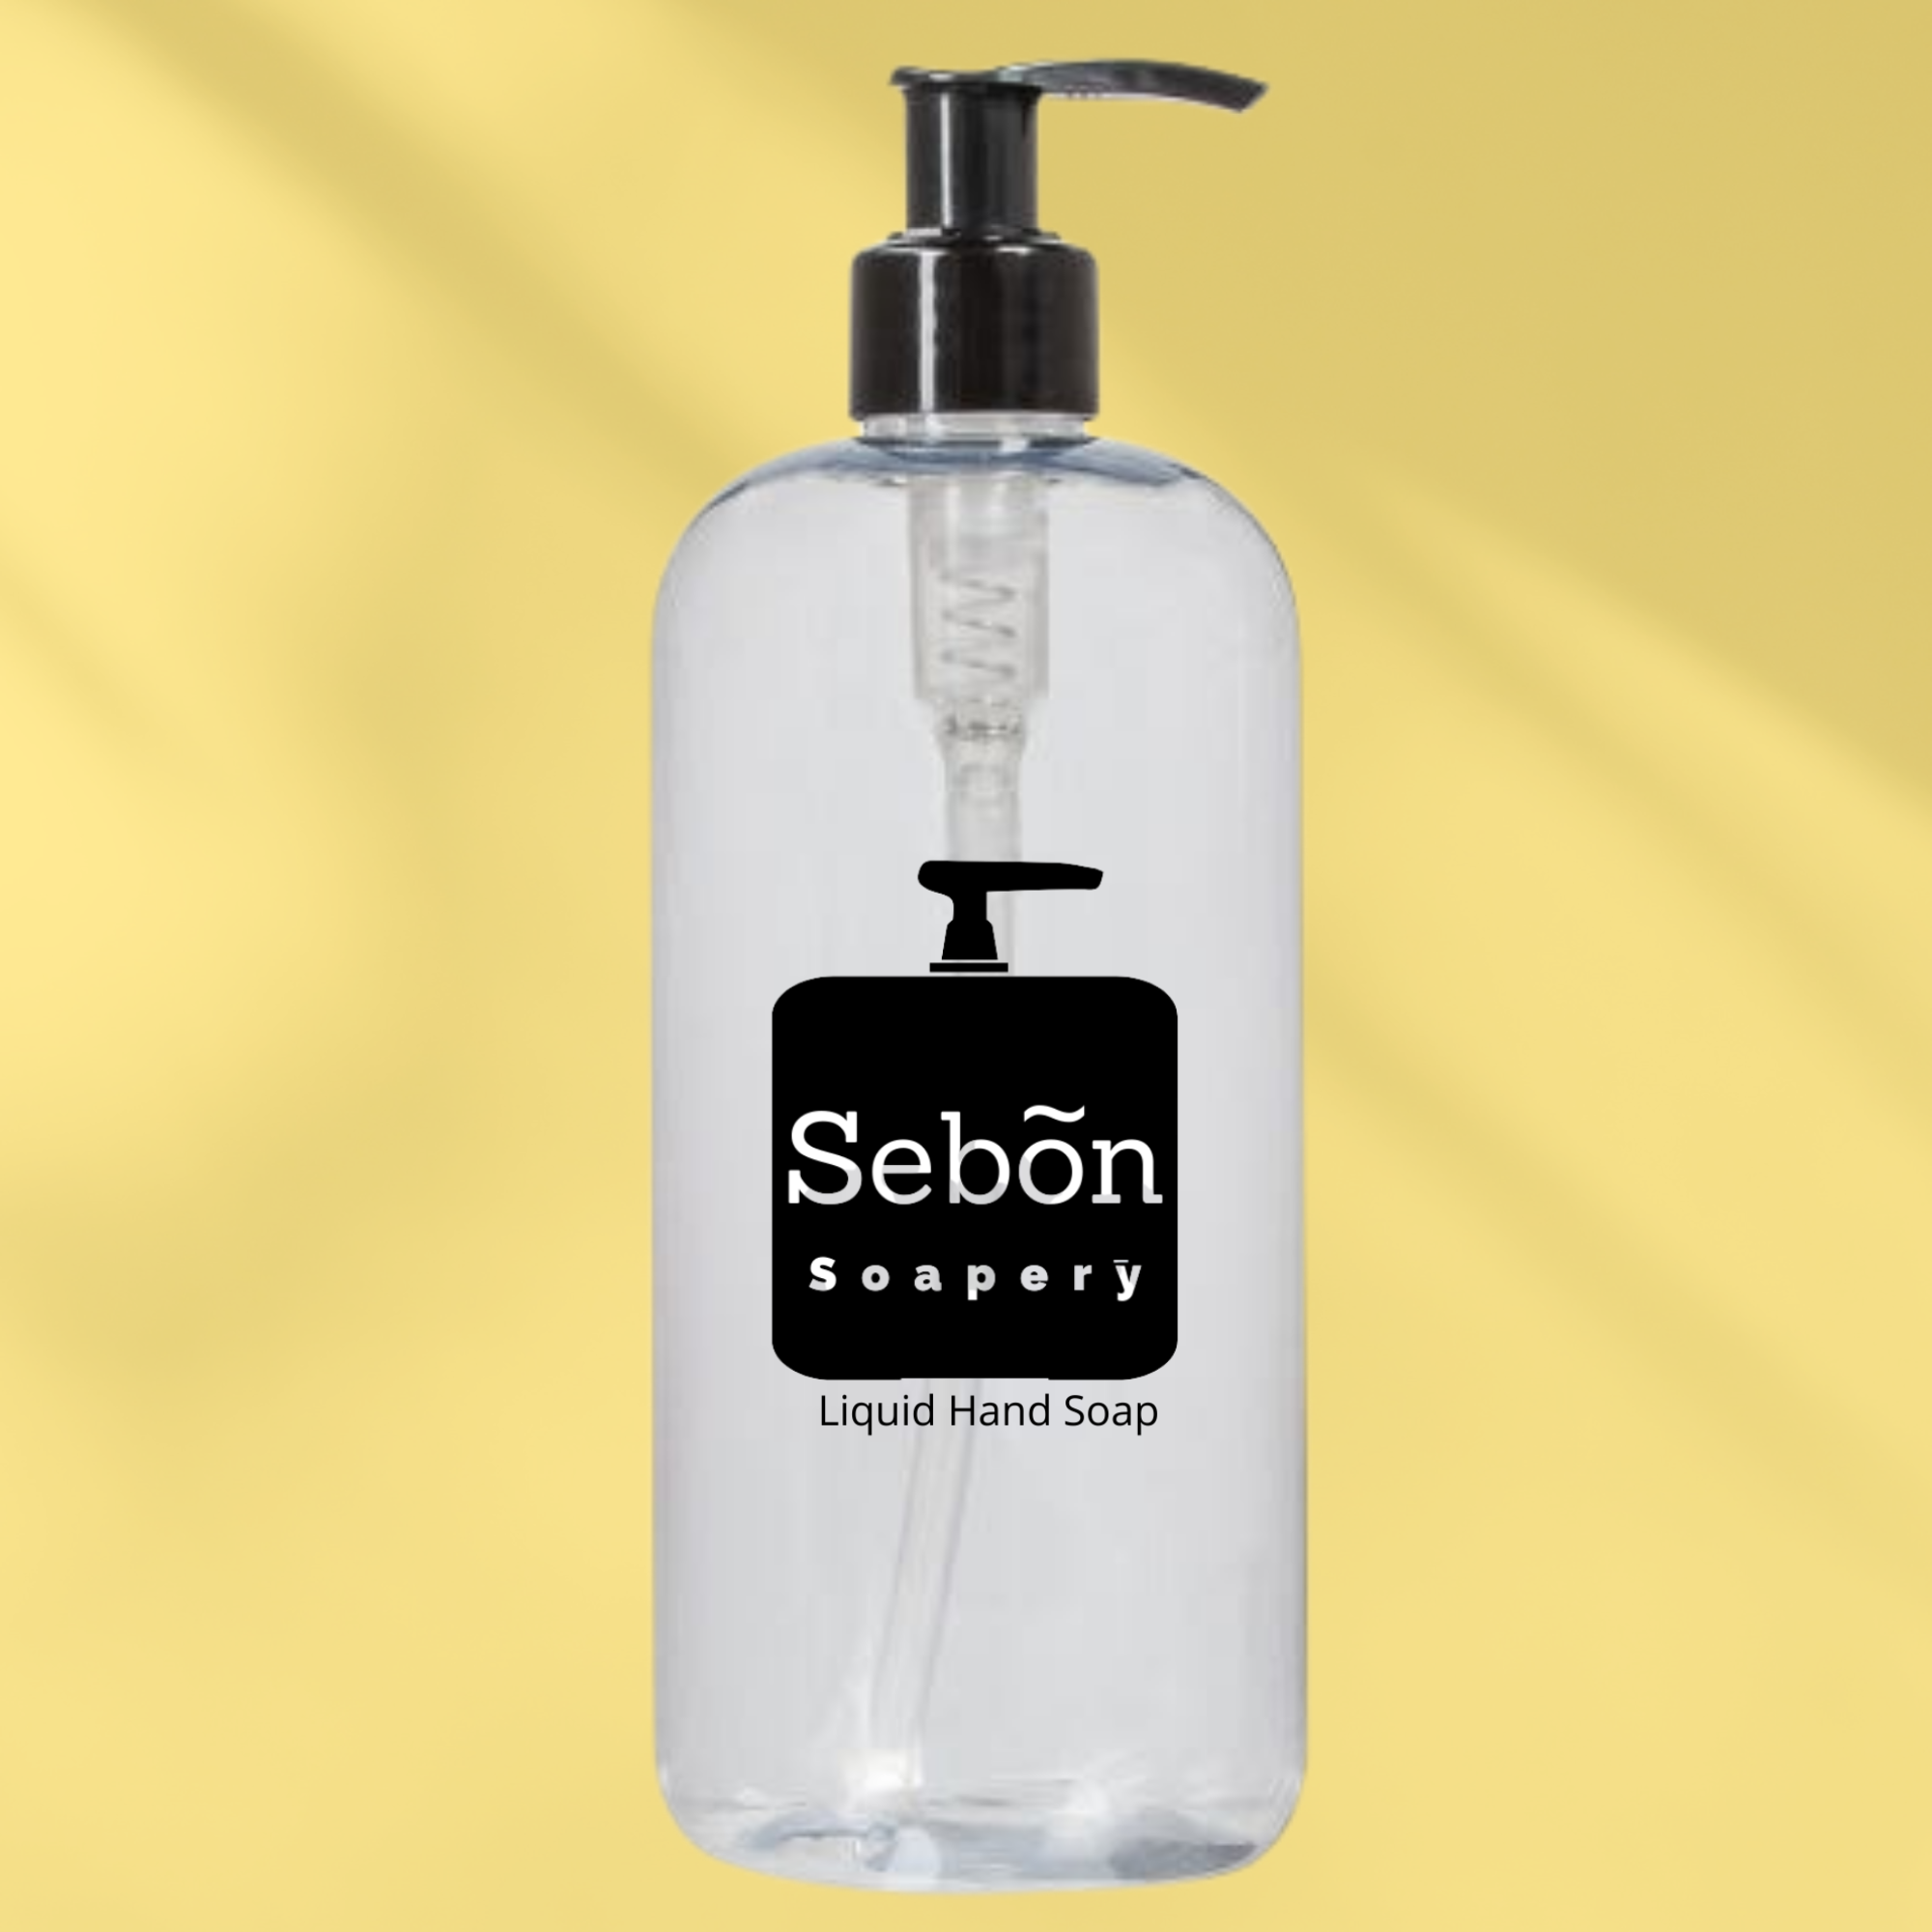 Sebon Blood Orange & Goji Scented Liquid Hand Soap with Olive Oil